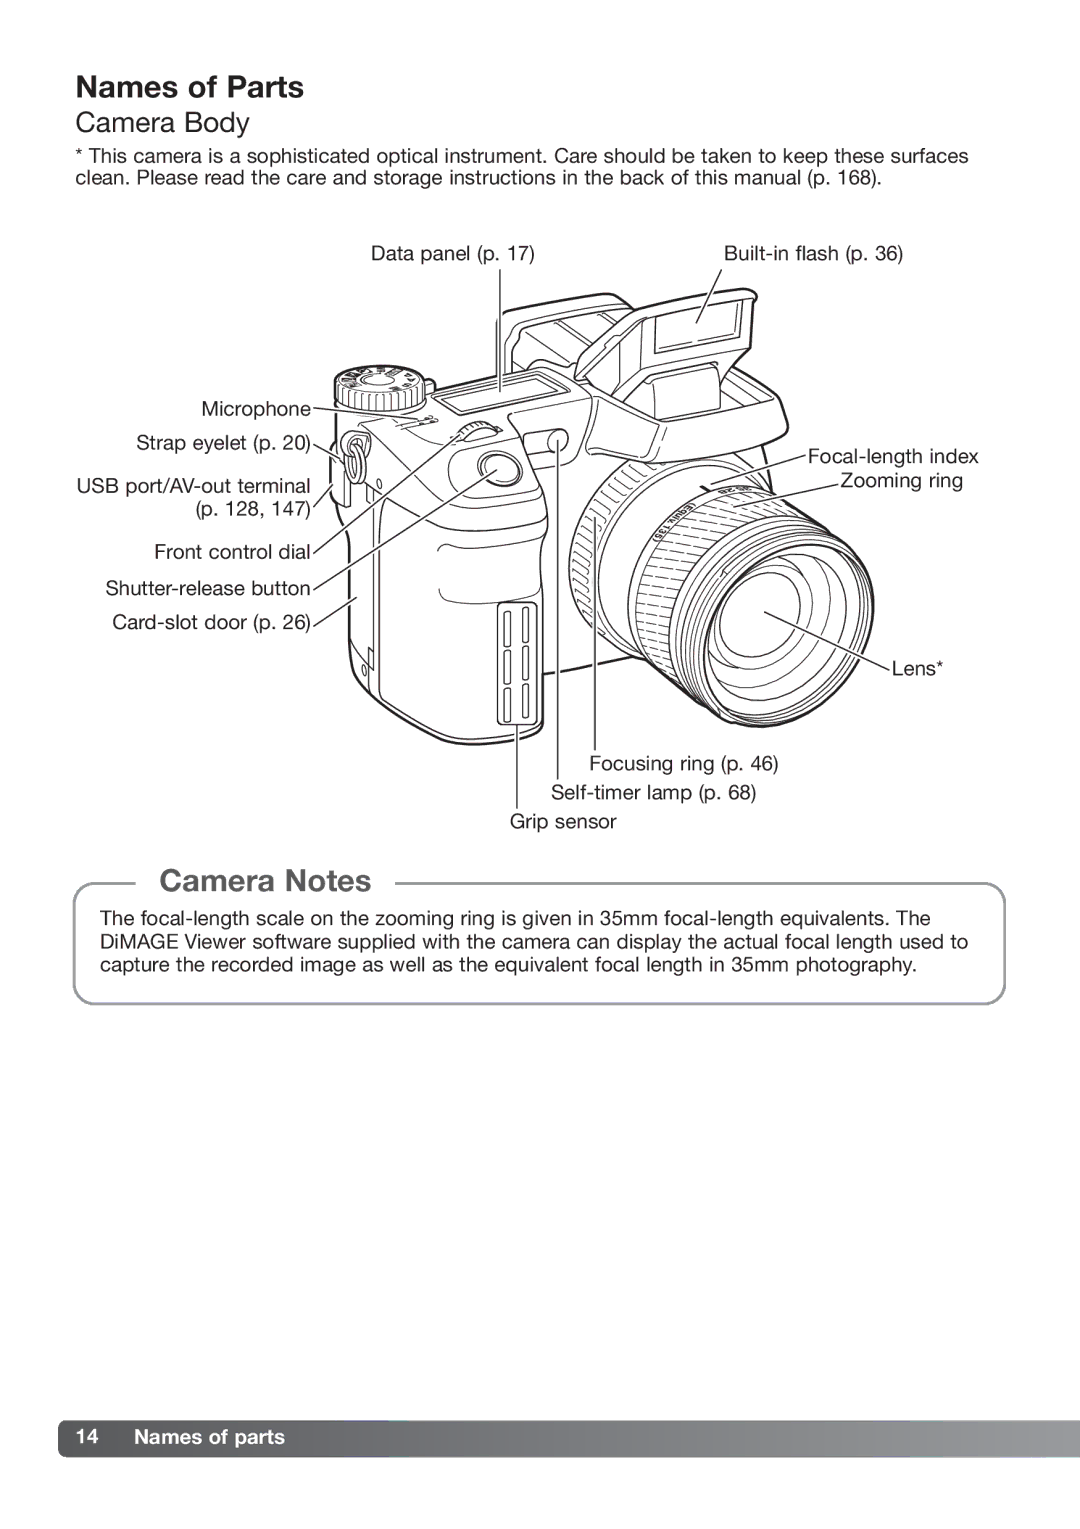 Konica Minolta DiMAGE_A2 instruction manual Names of Parts, Camera Body, Names of parts 